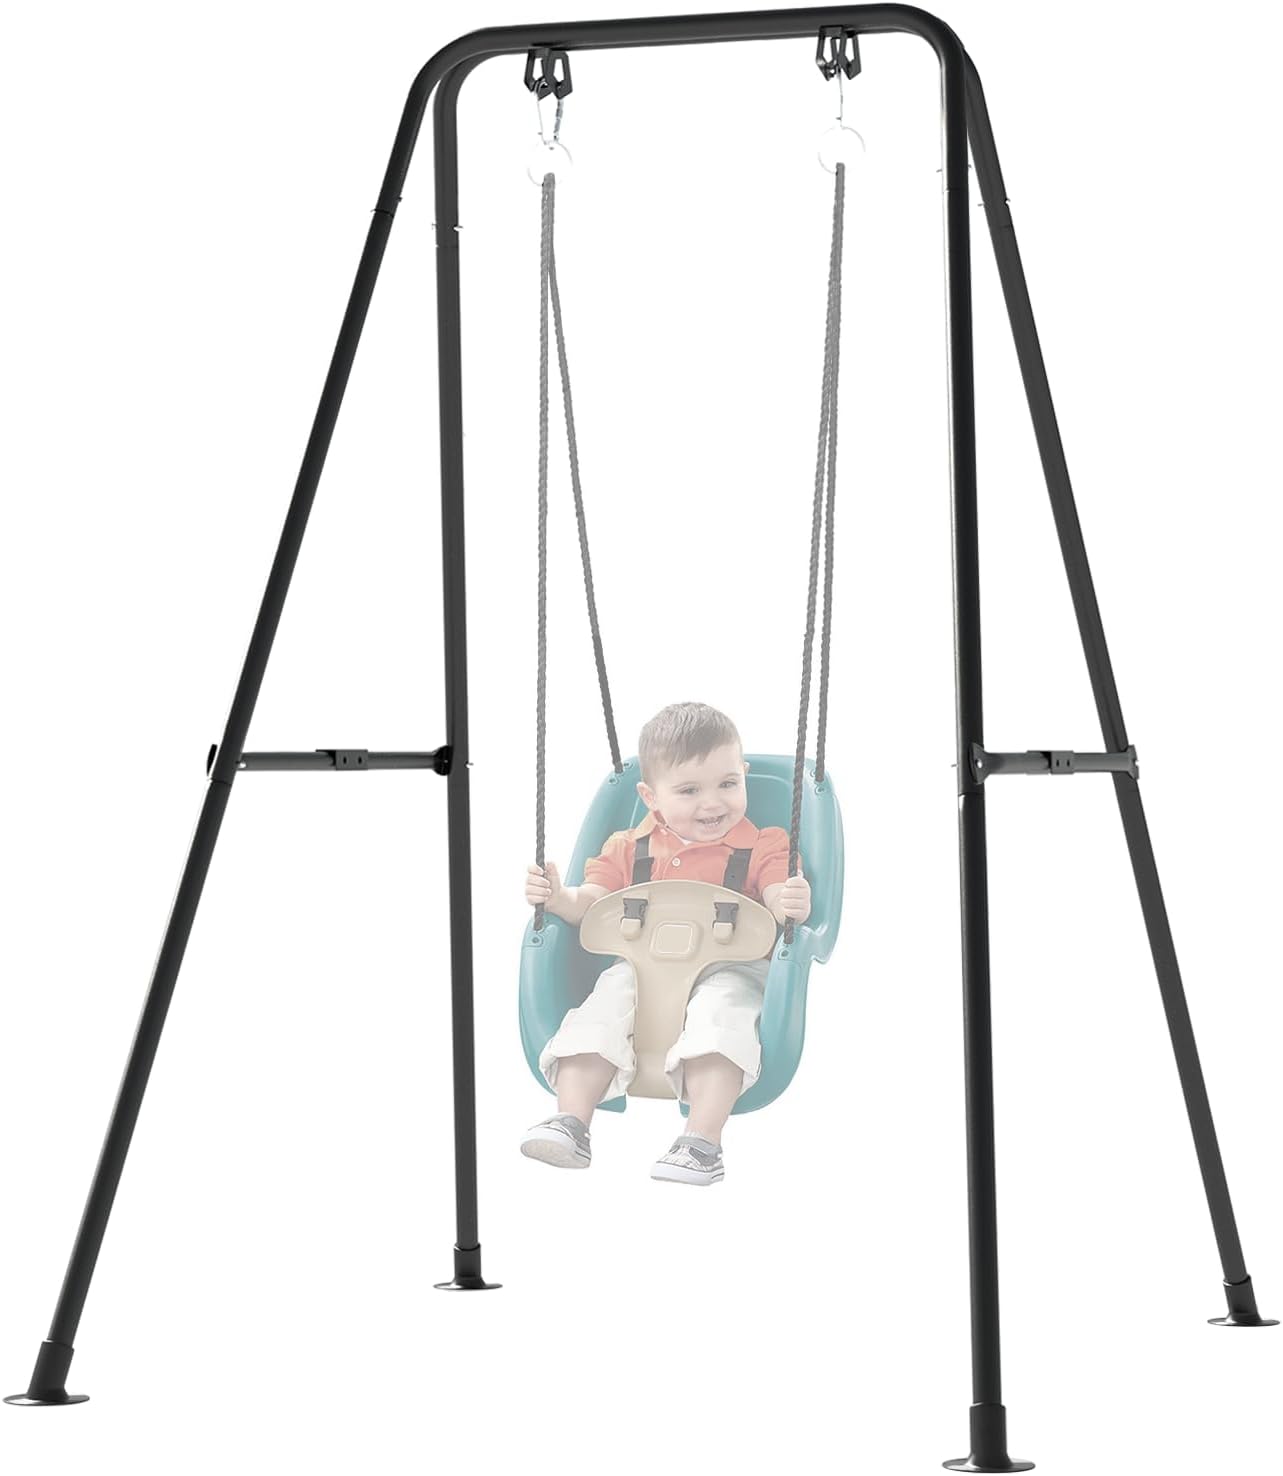 Foldable Children's Swing Stand, Heavy-Duty Metal Swing Frame for Kids - $55